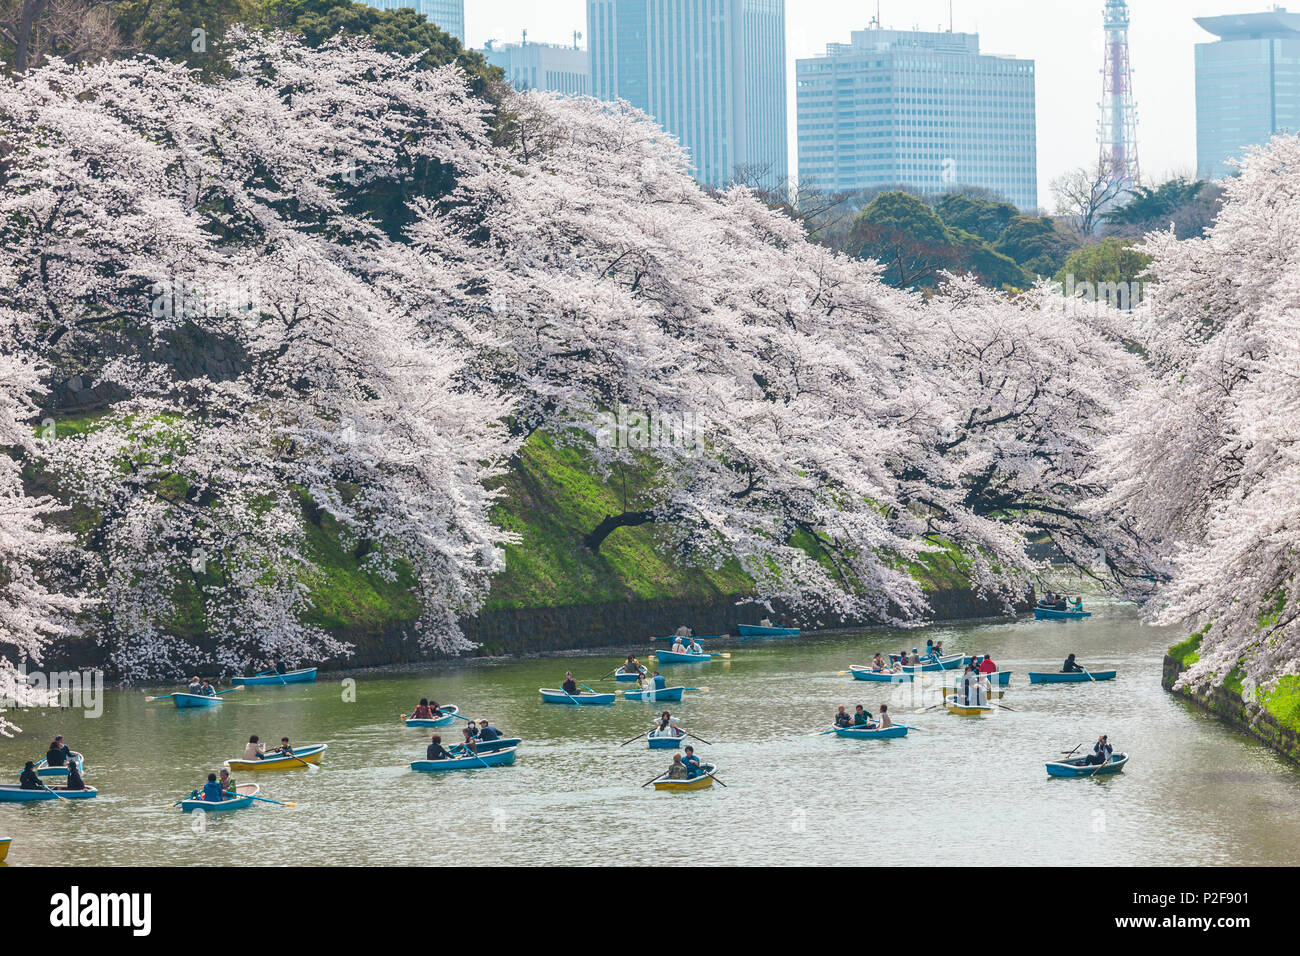 Chidori-ga-fuchi with leisure boats people enjoying cherry blossom in spring, Chiyoda-ku, Tokyo, Japan Stock Photo